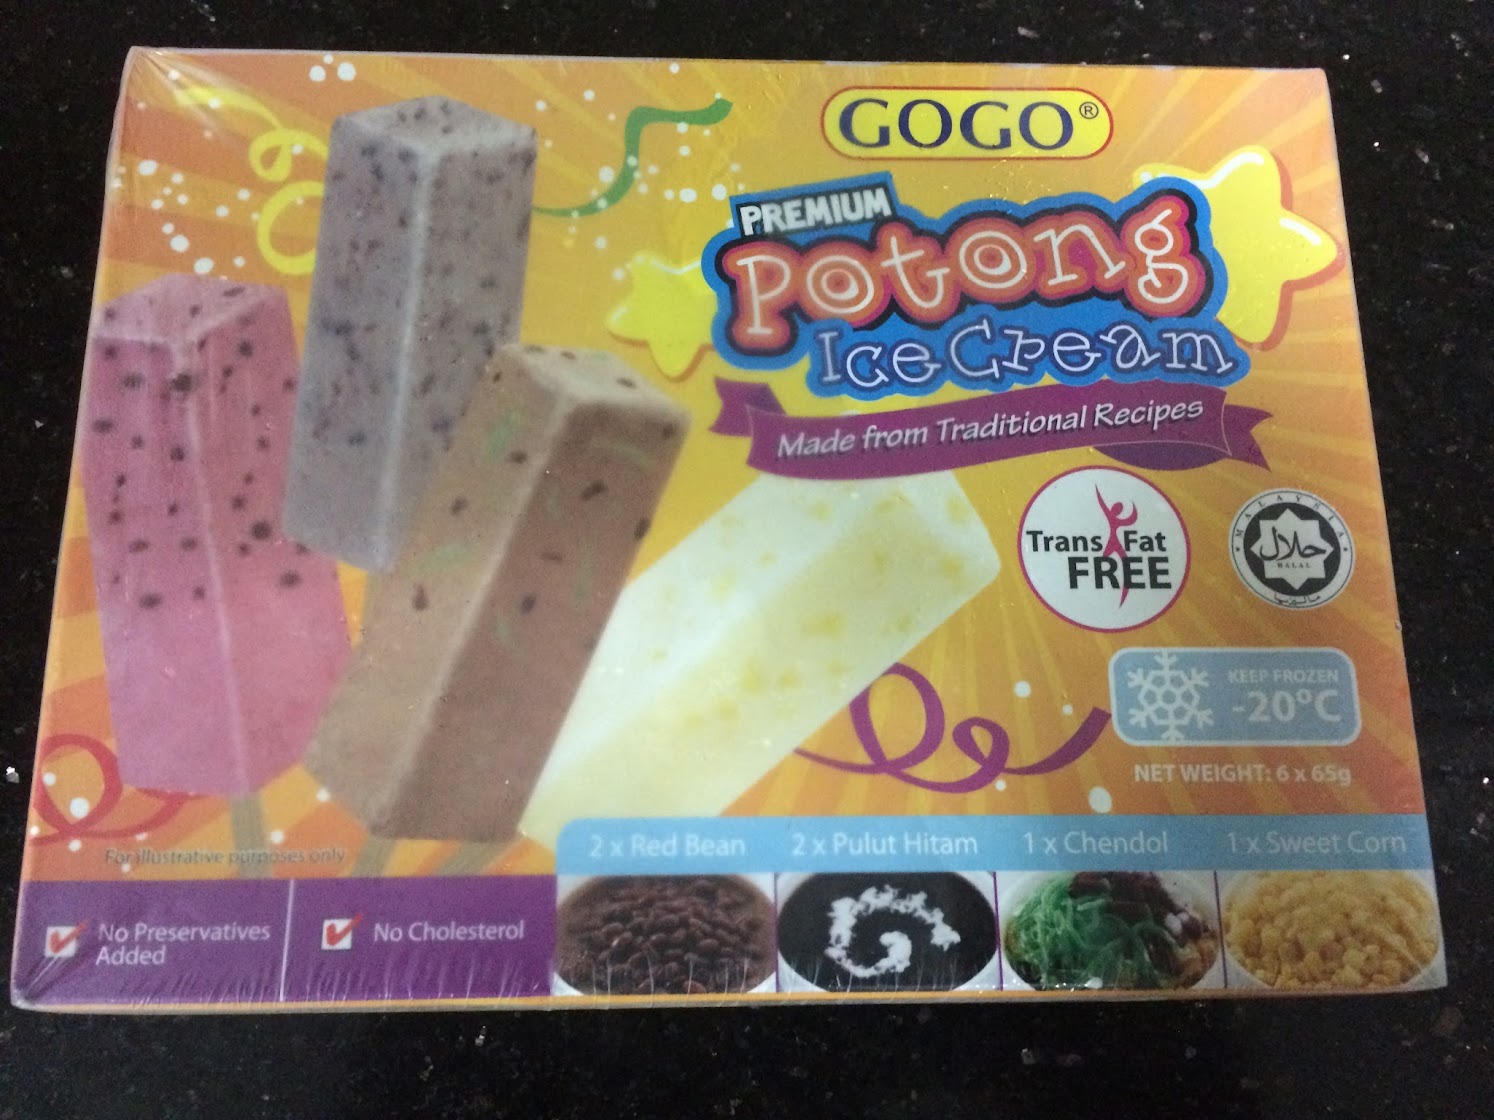 Gogo Potong Ice cream 6s